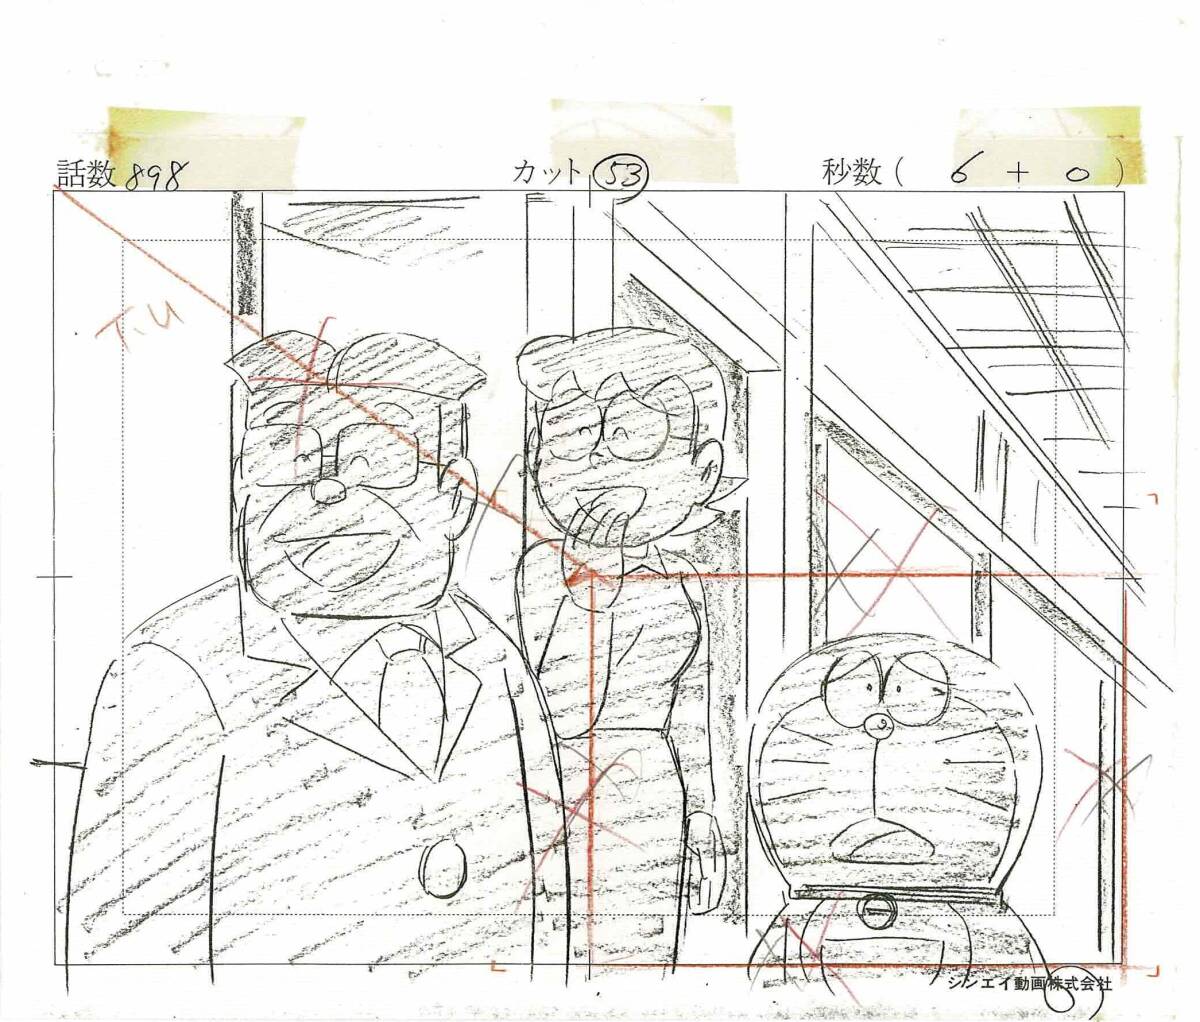  Doraemon рост futoshi. мама цифровая картинка анимация исходная картина фон . глициния .*F* не 2 самец Shogakukan Inc. CoroCoro Comic ... kun телевизор утро день [A145]